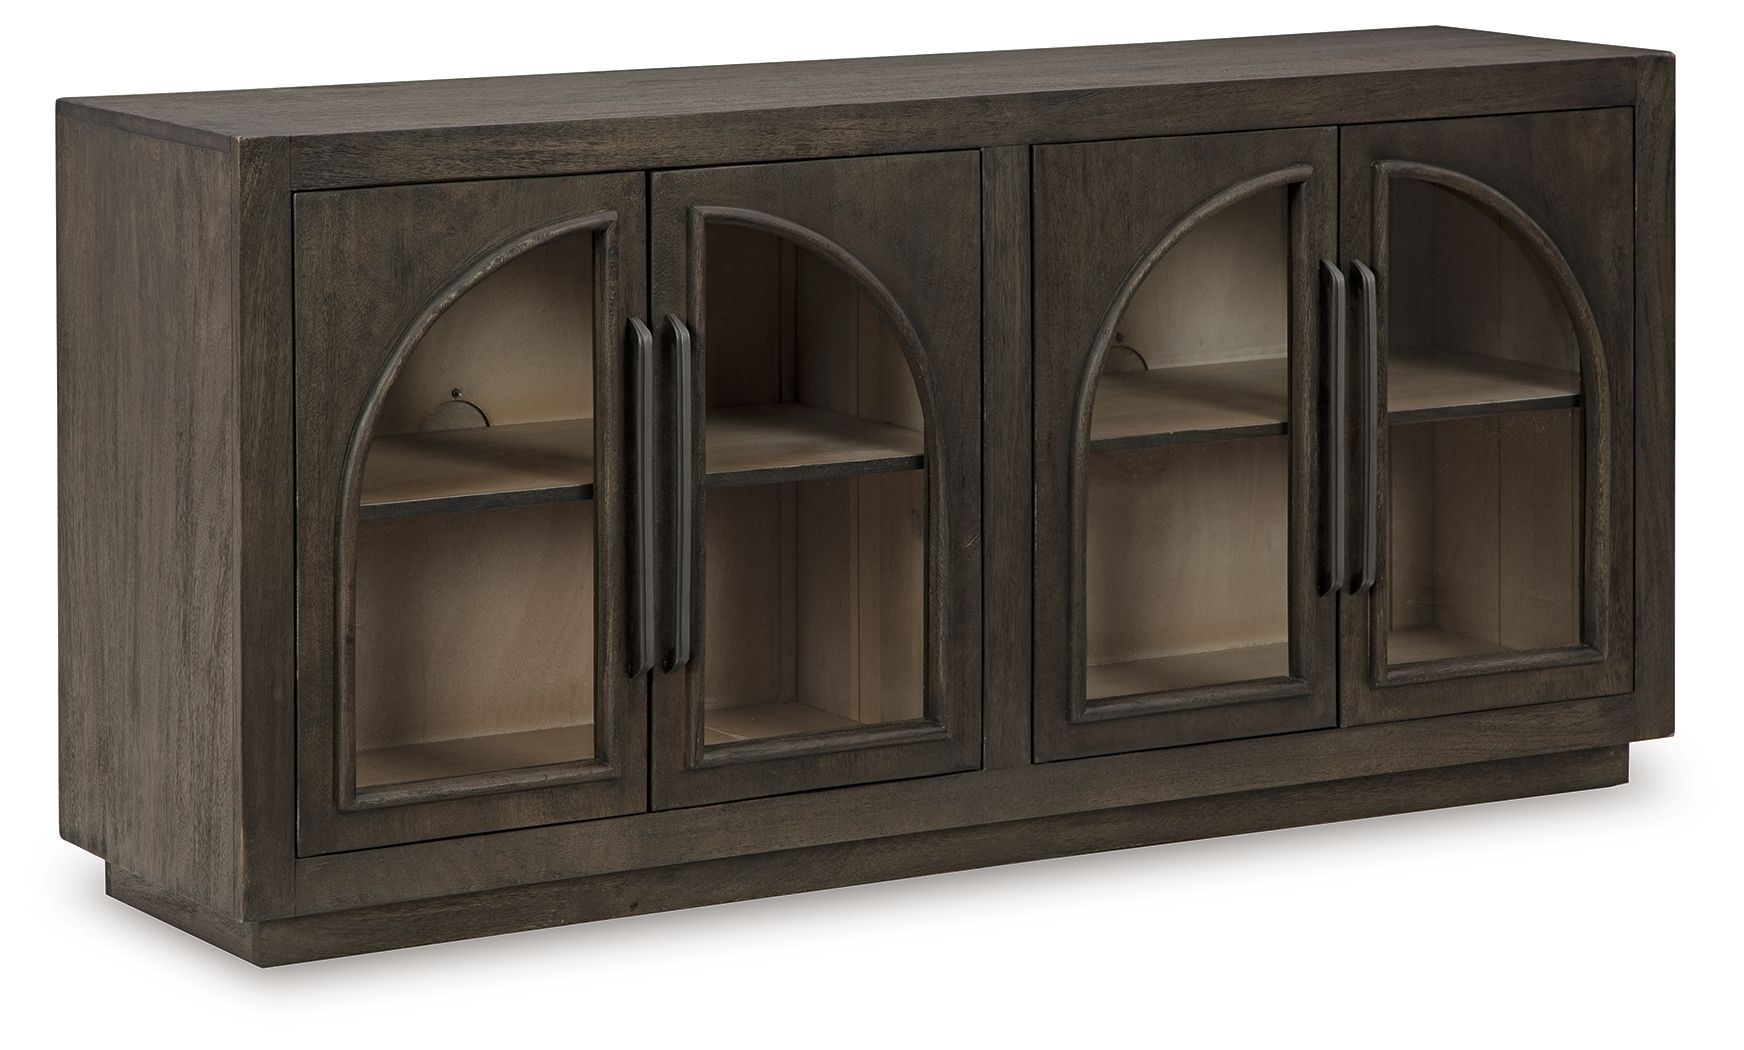 Dreley - Grayish Brown - Accent Cabinet - 5th Avenue Furniture